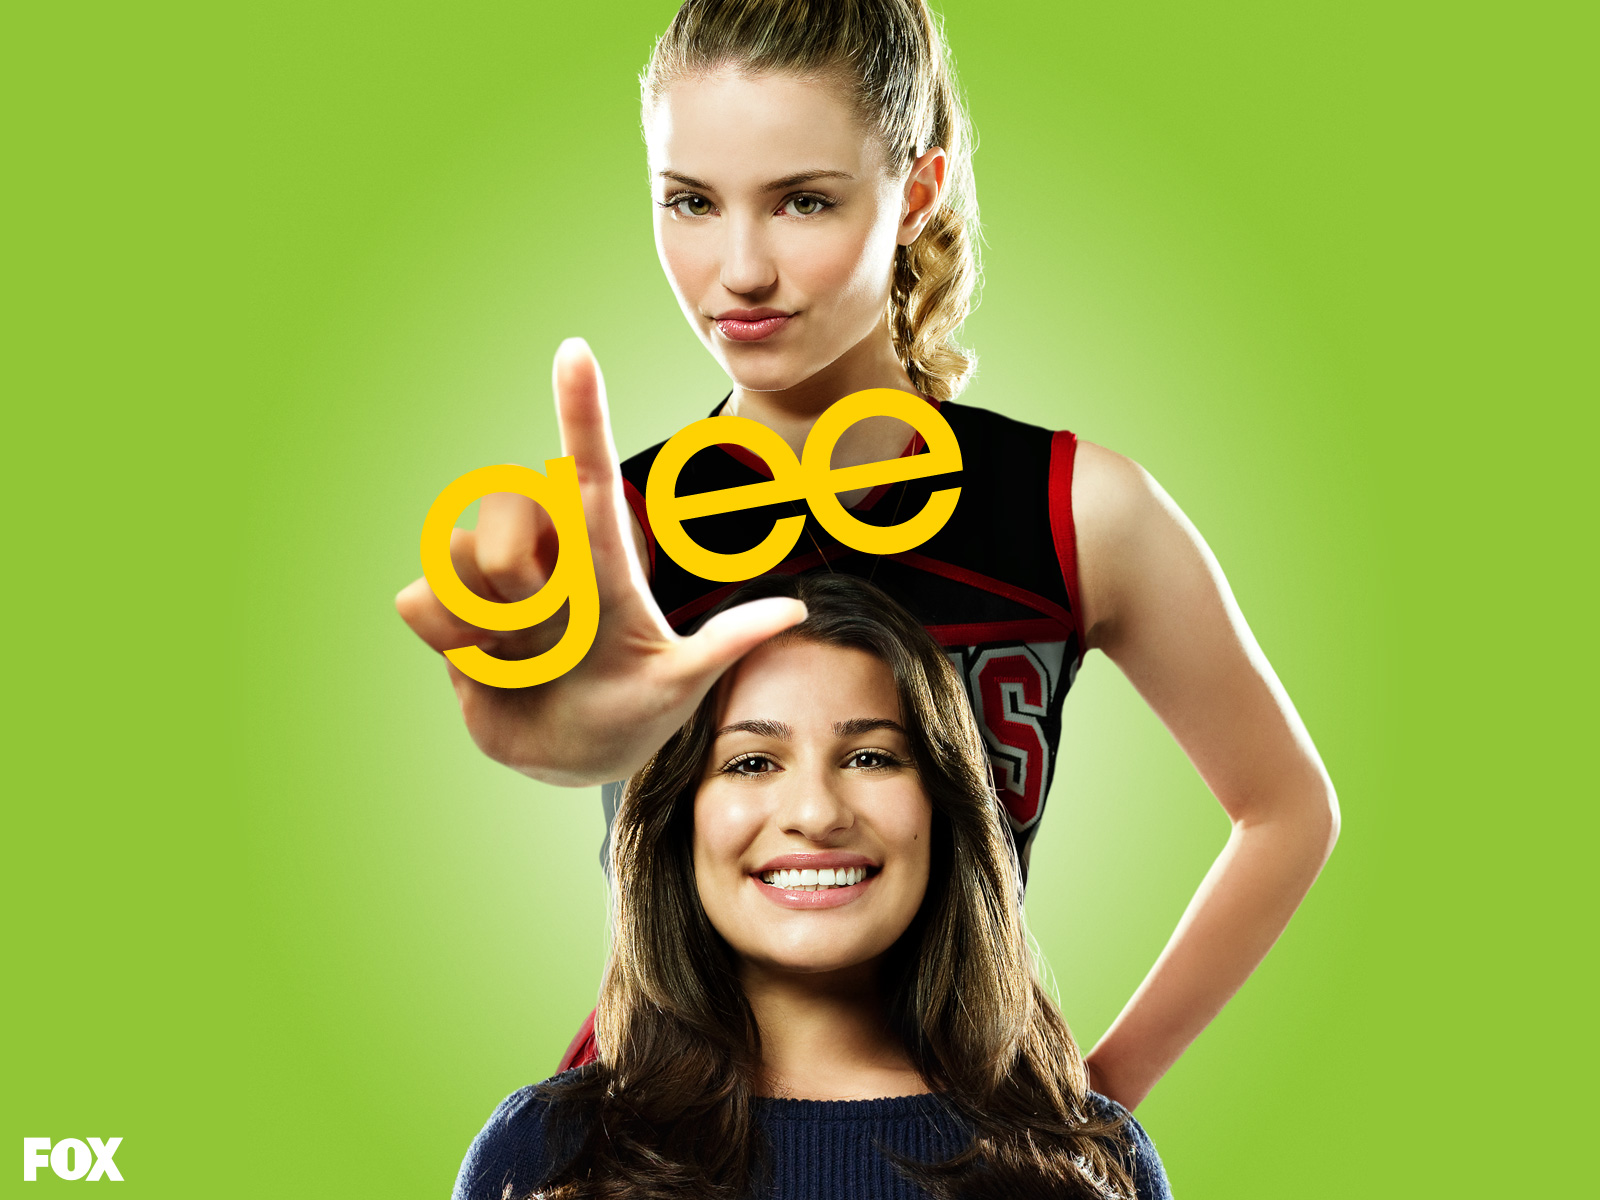 Photo Of Glee